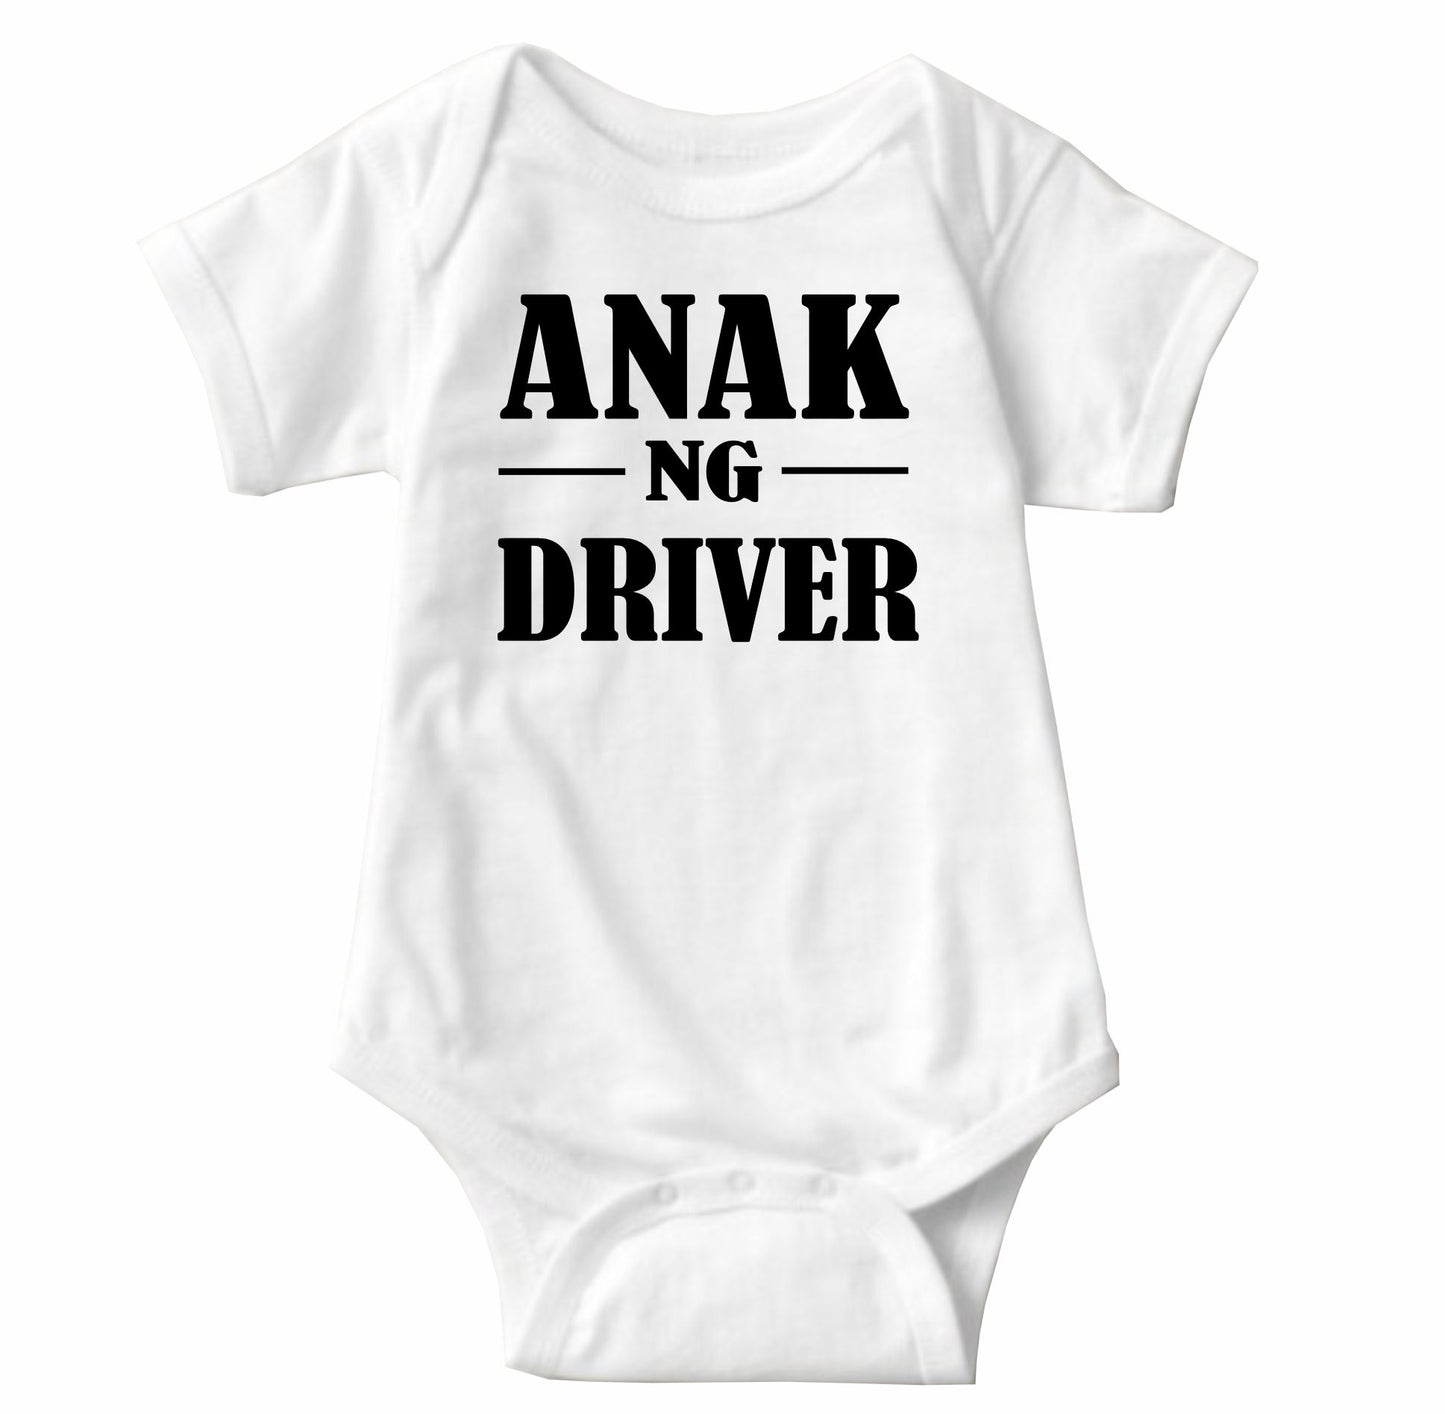 Baby Statement Onesies - Anak ng Driver